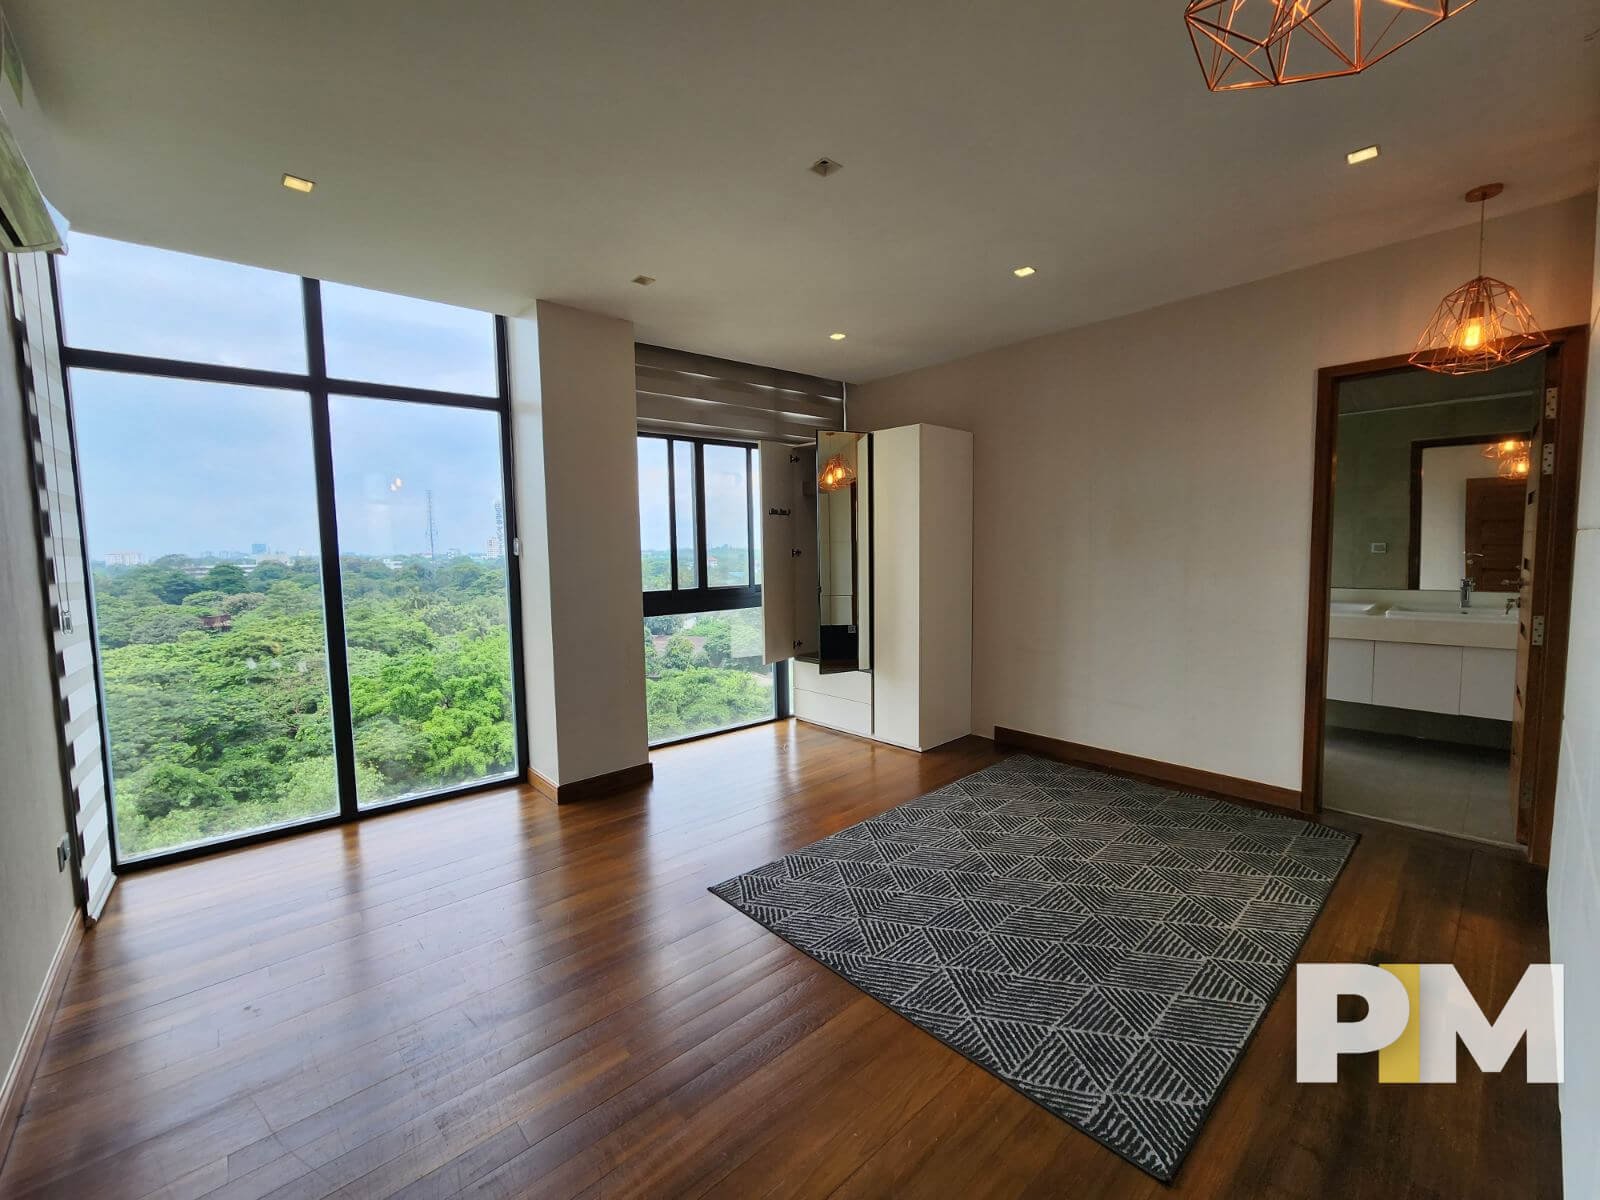 Room view - Property in Myanmar